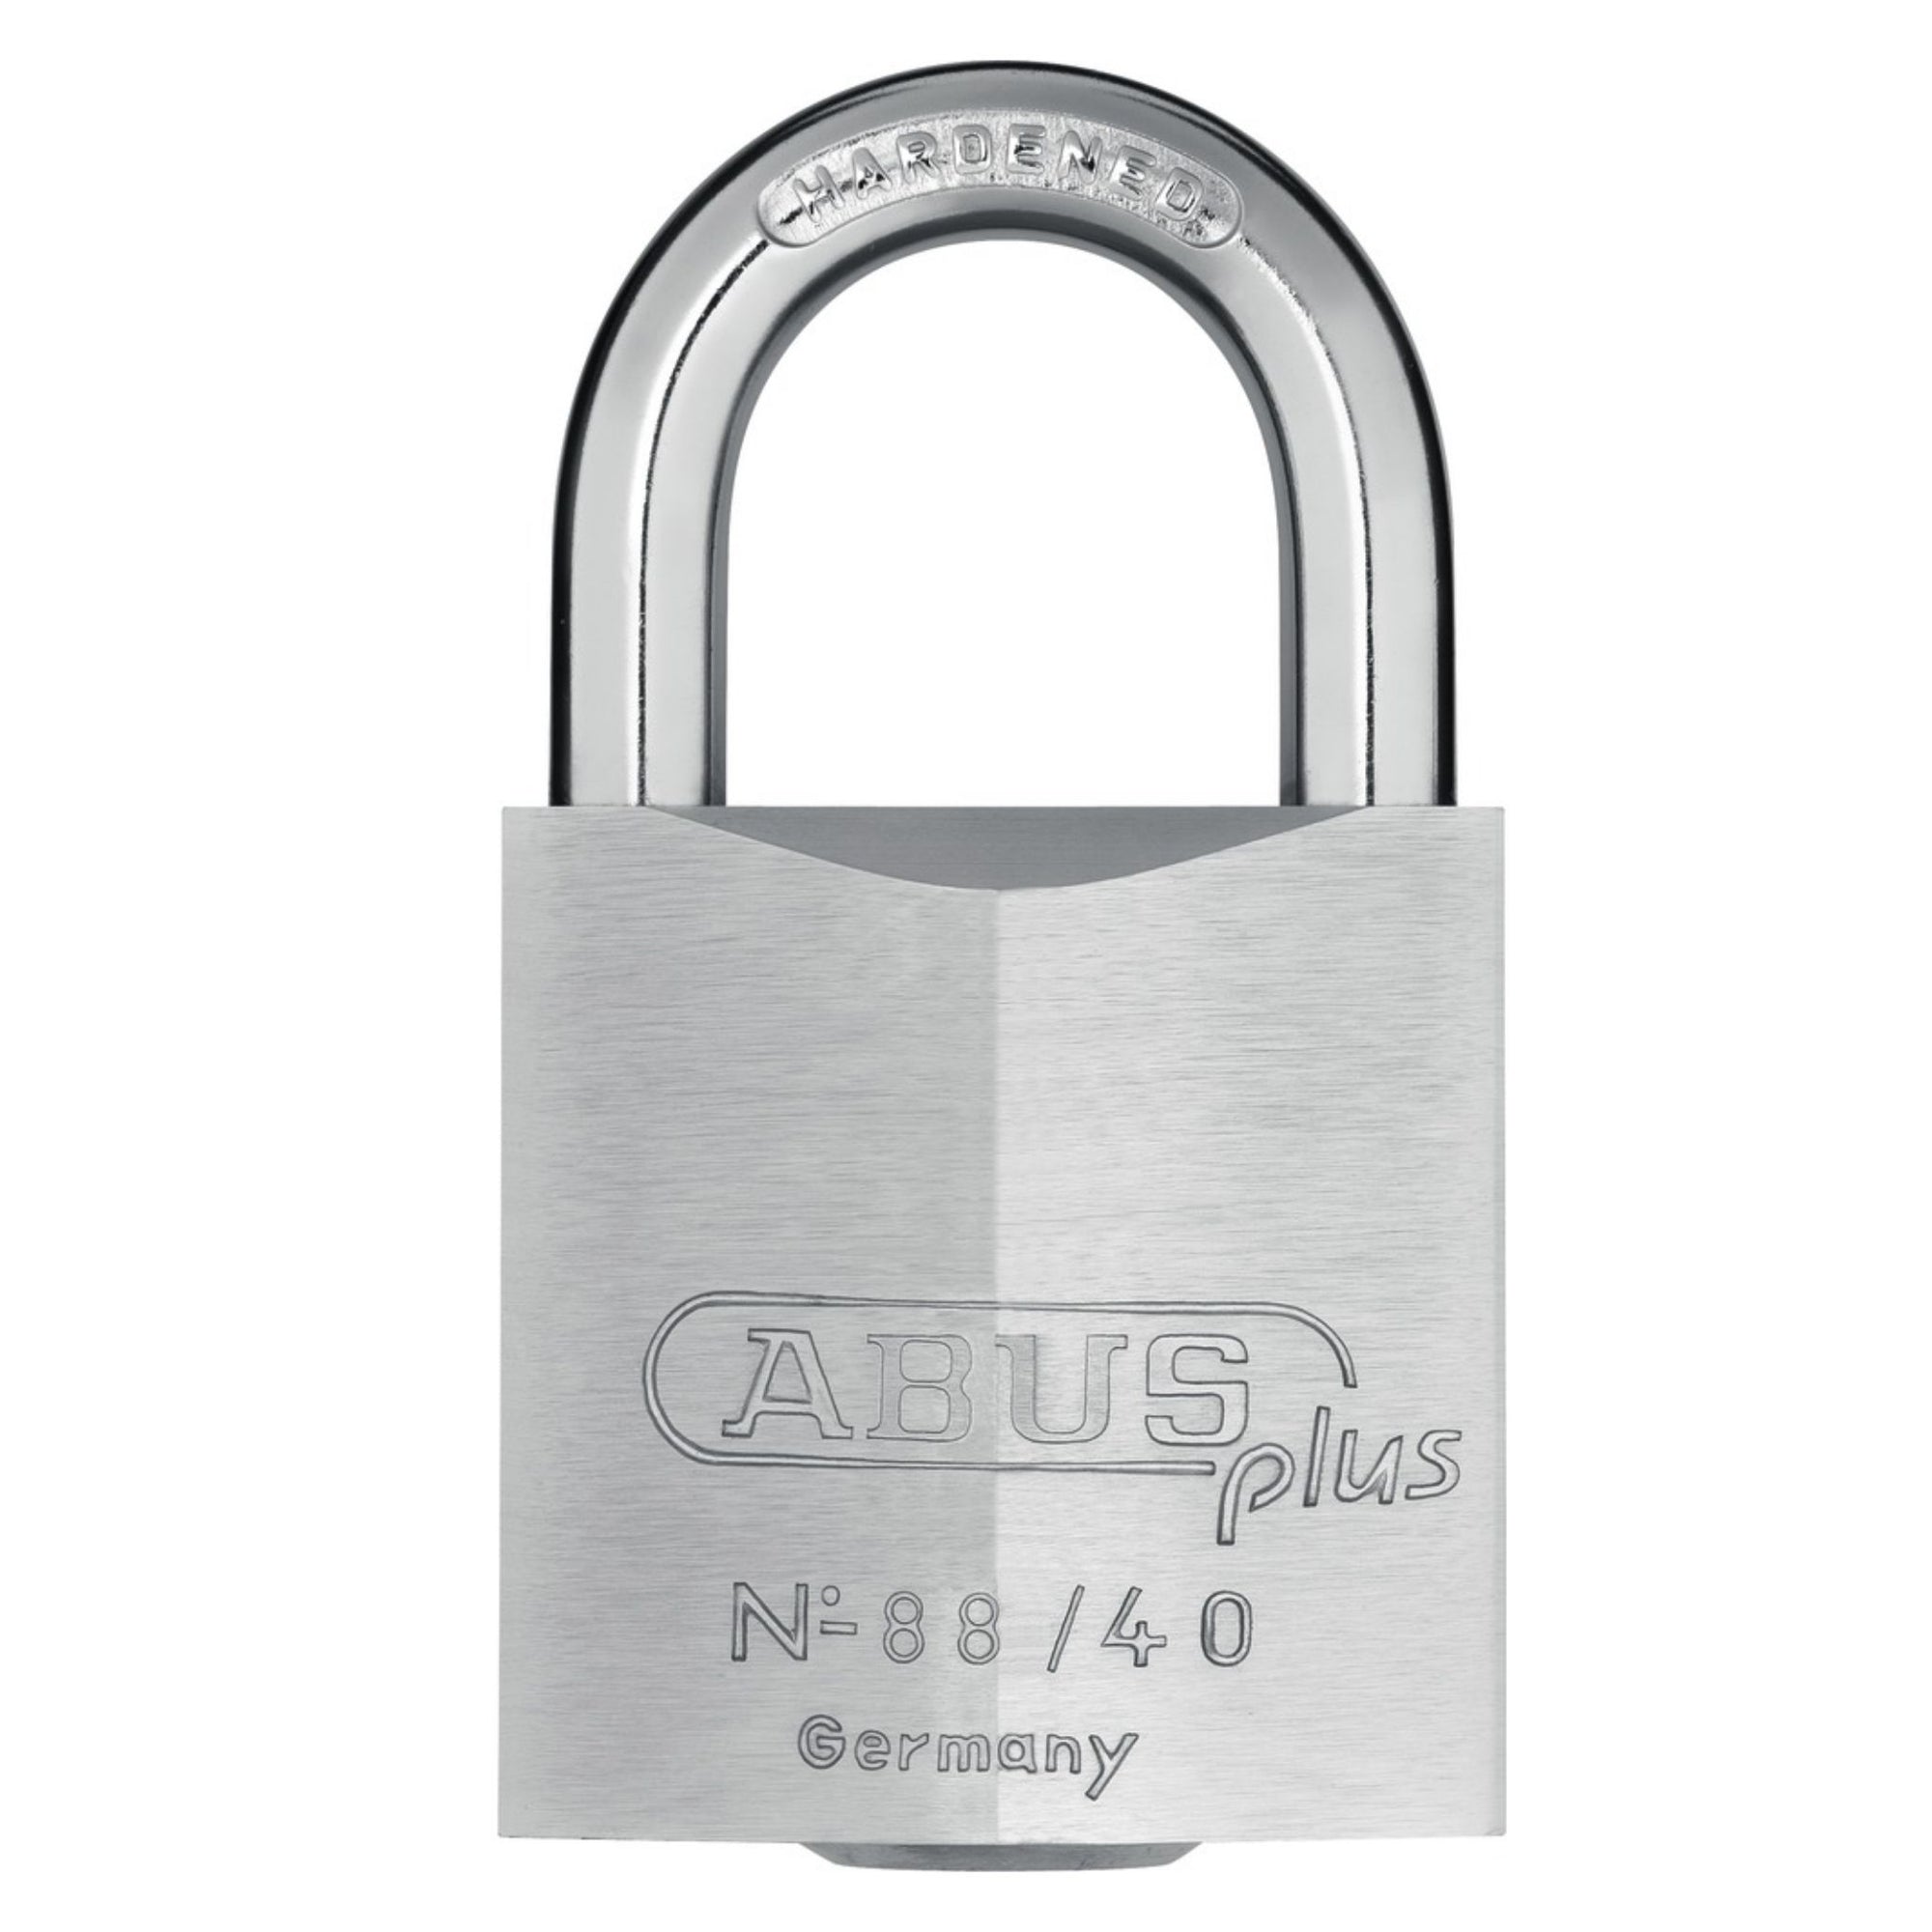 Abus 88/40 KA 1533314 Solid Chrome Plated Brass Locks Keyed Alike to Match Existing Key Number KA1533314 - The Lock Source